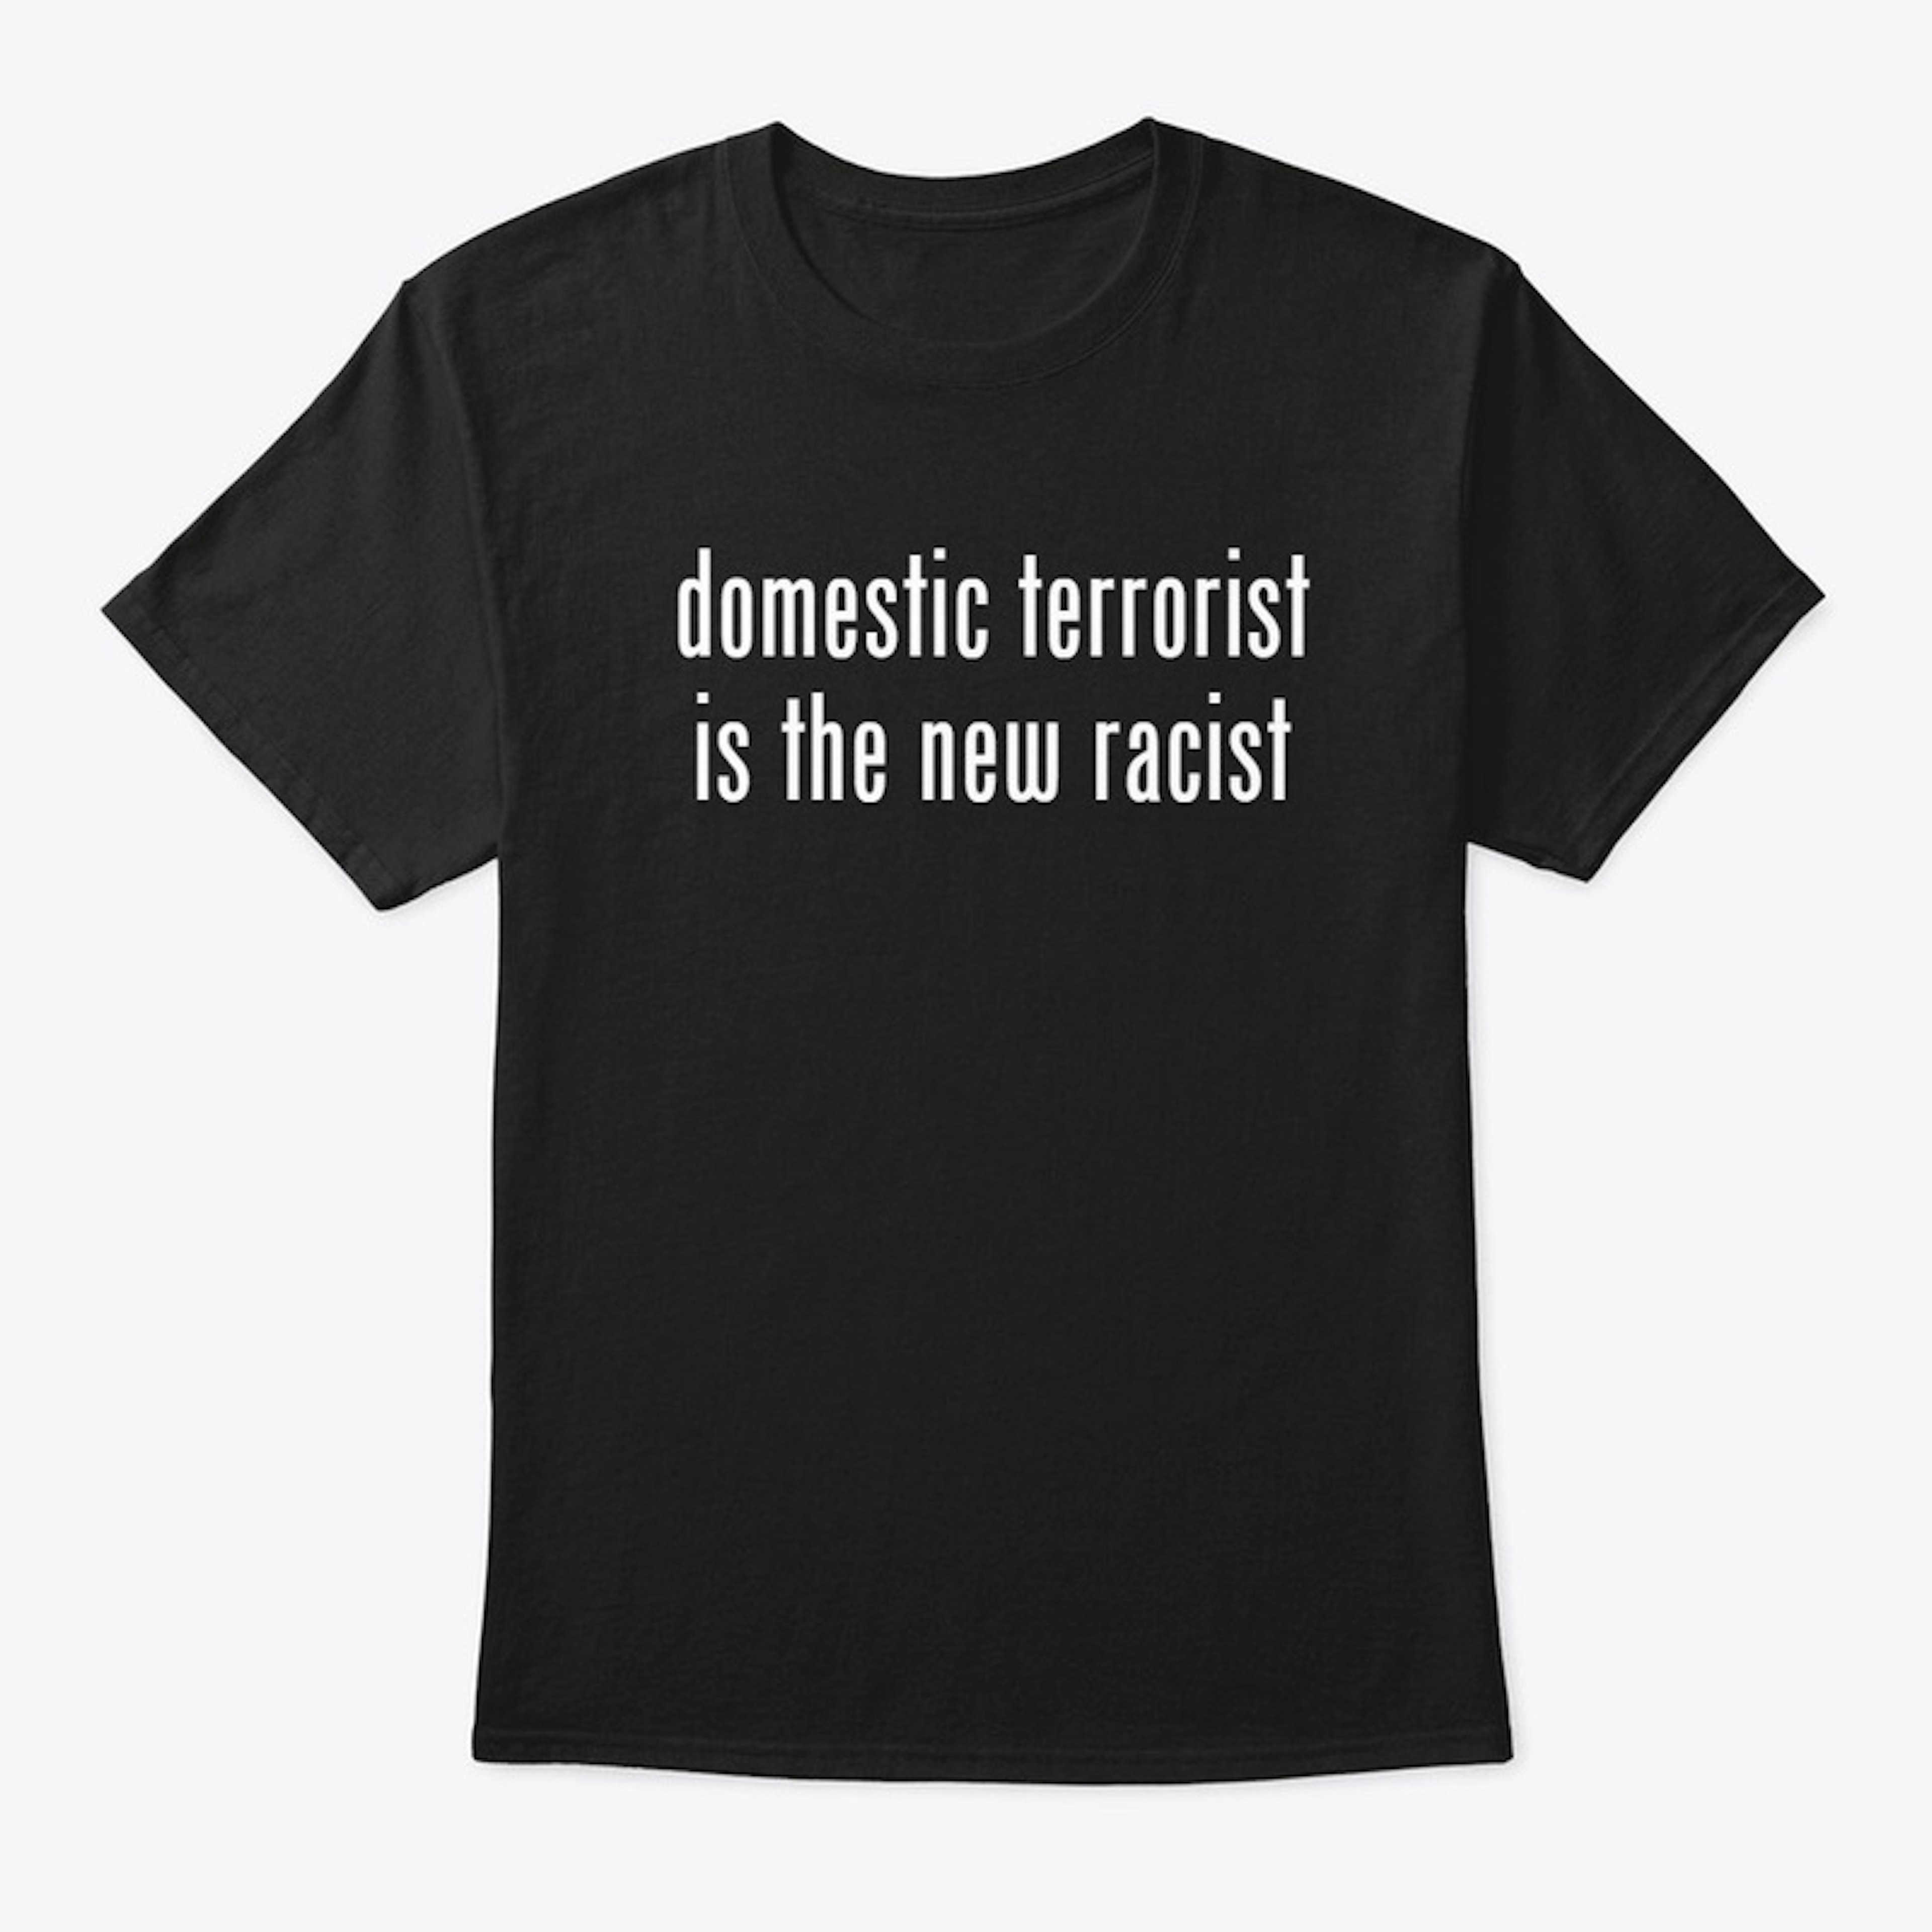 domestic terrorist is the new racist